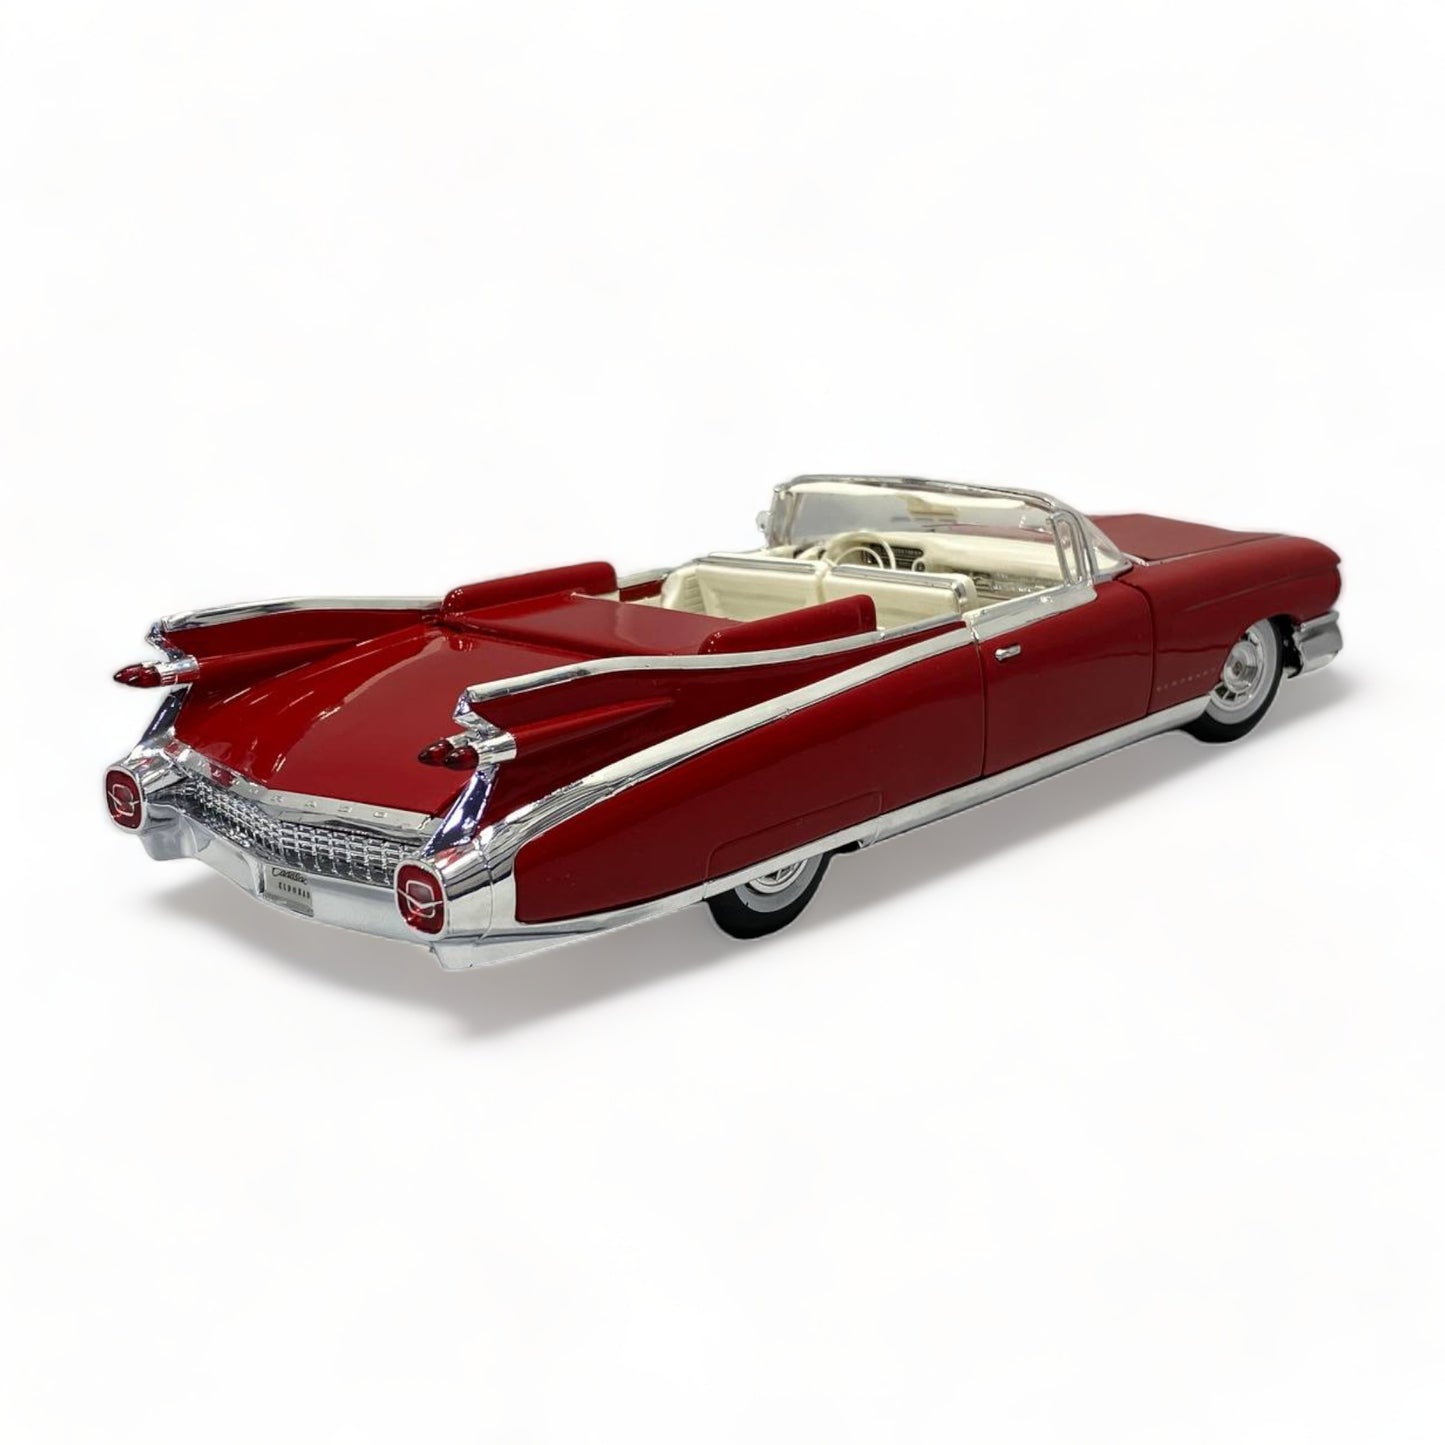 1/18 Diecast Cadillac Eldorado Biarritz  RED 1959 Scale Model Car by Maisto|Sold in Dturman.com Dubai UAE.